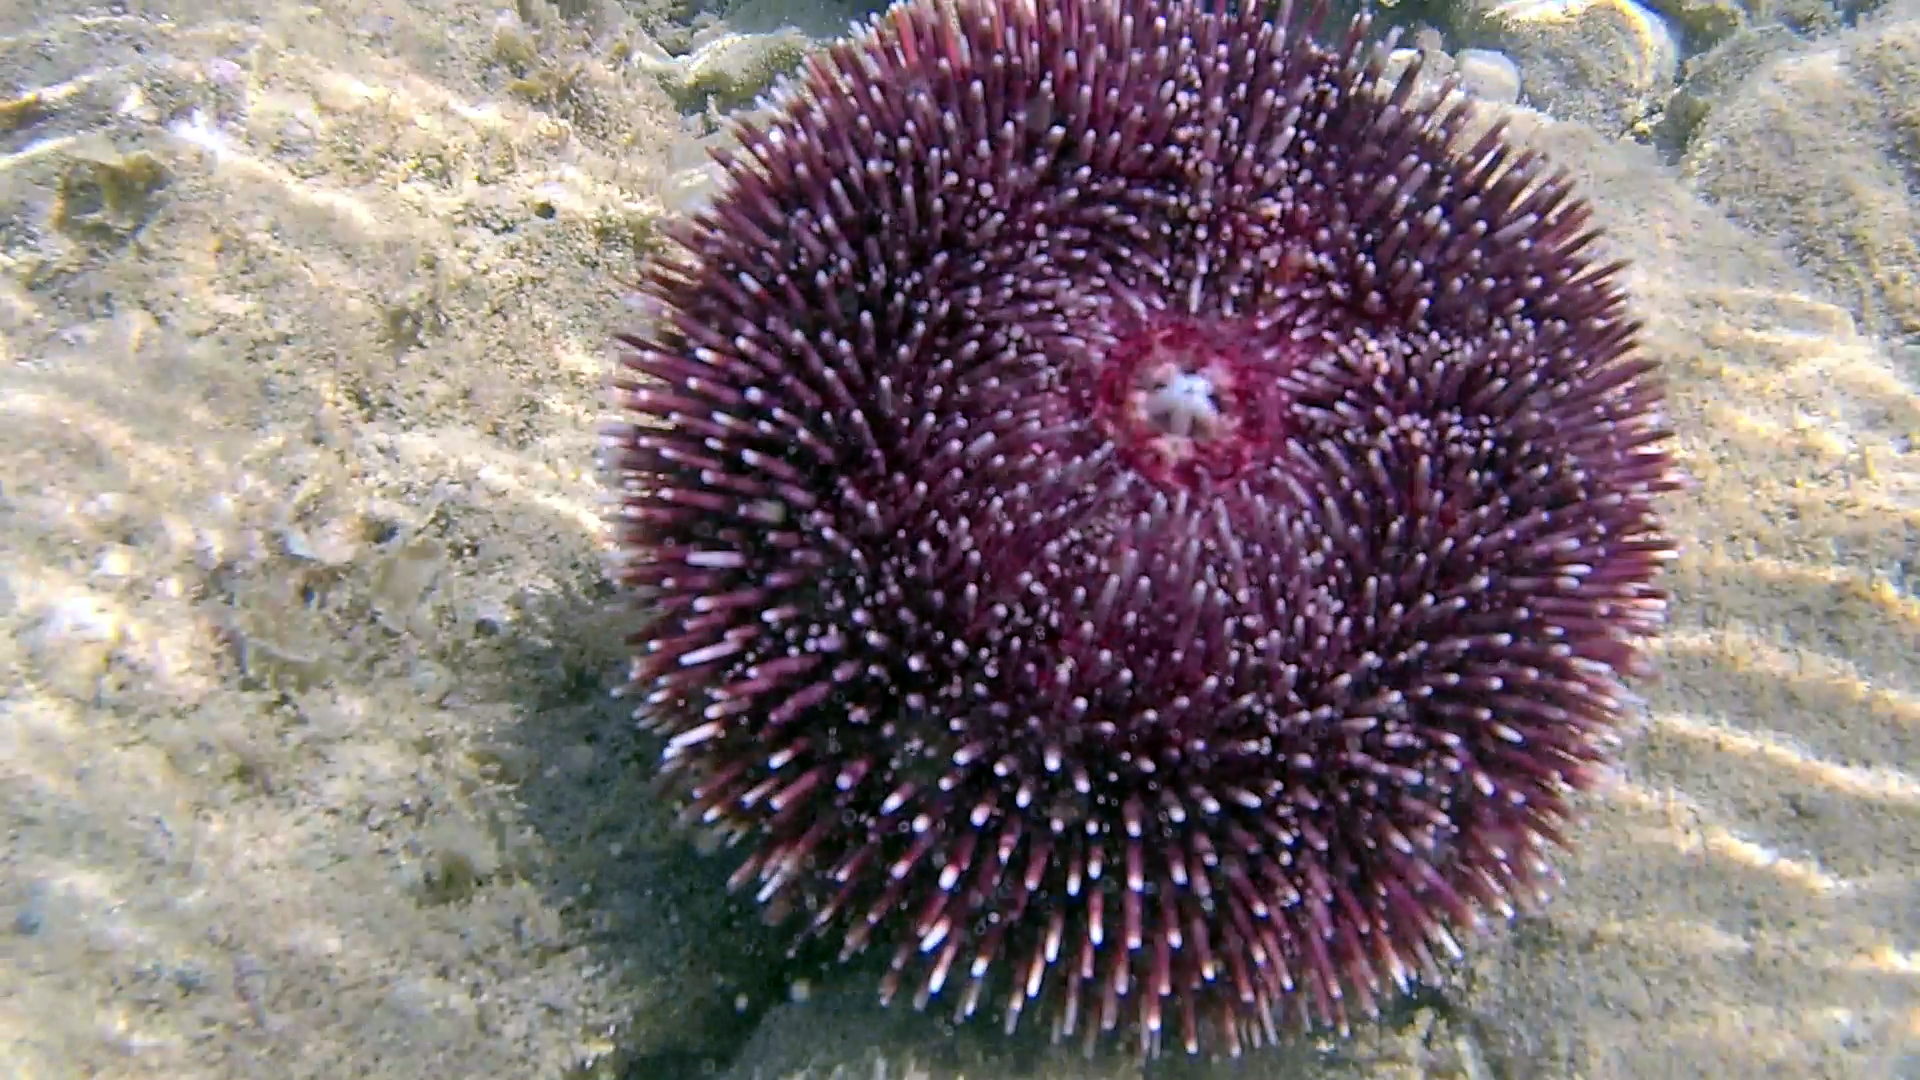 Riccio di Prateria - Sphaerechinus granularis - Purple sea Urchin - lato inferiore - bottom side - intotheblue.it